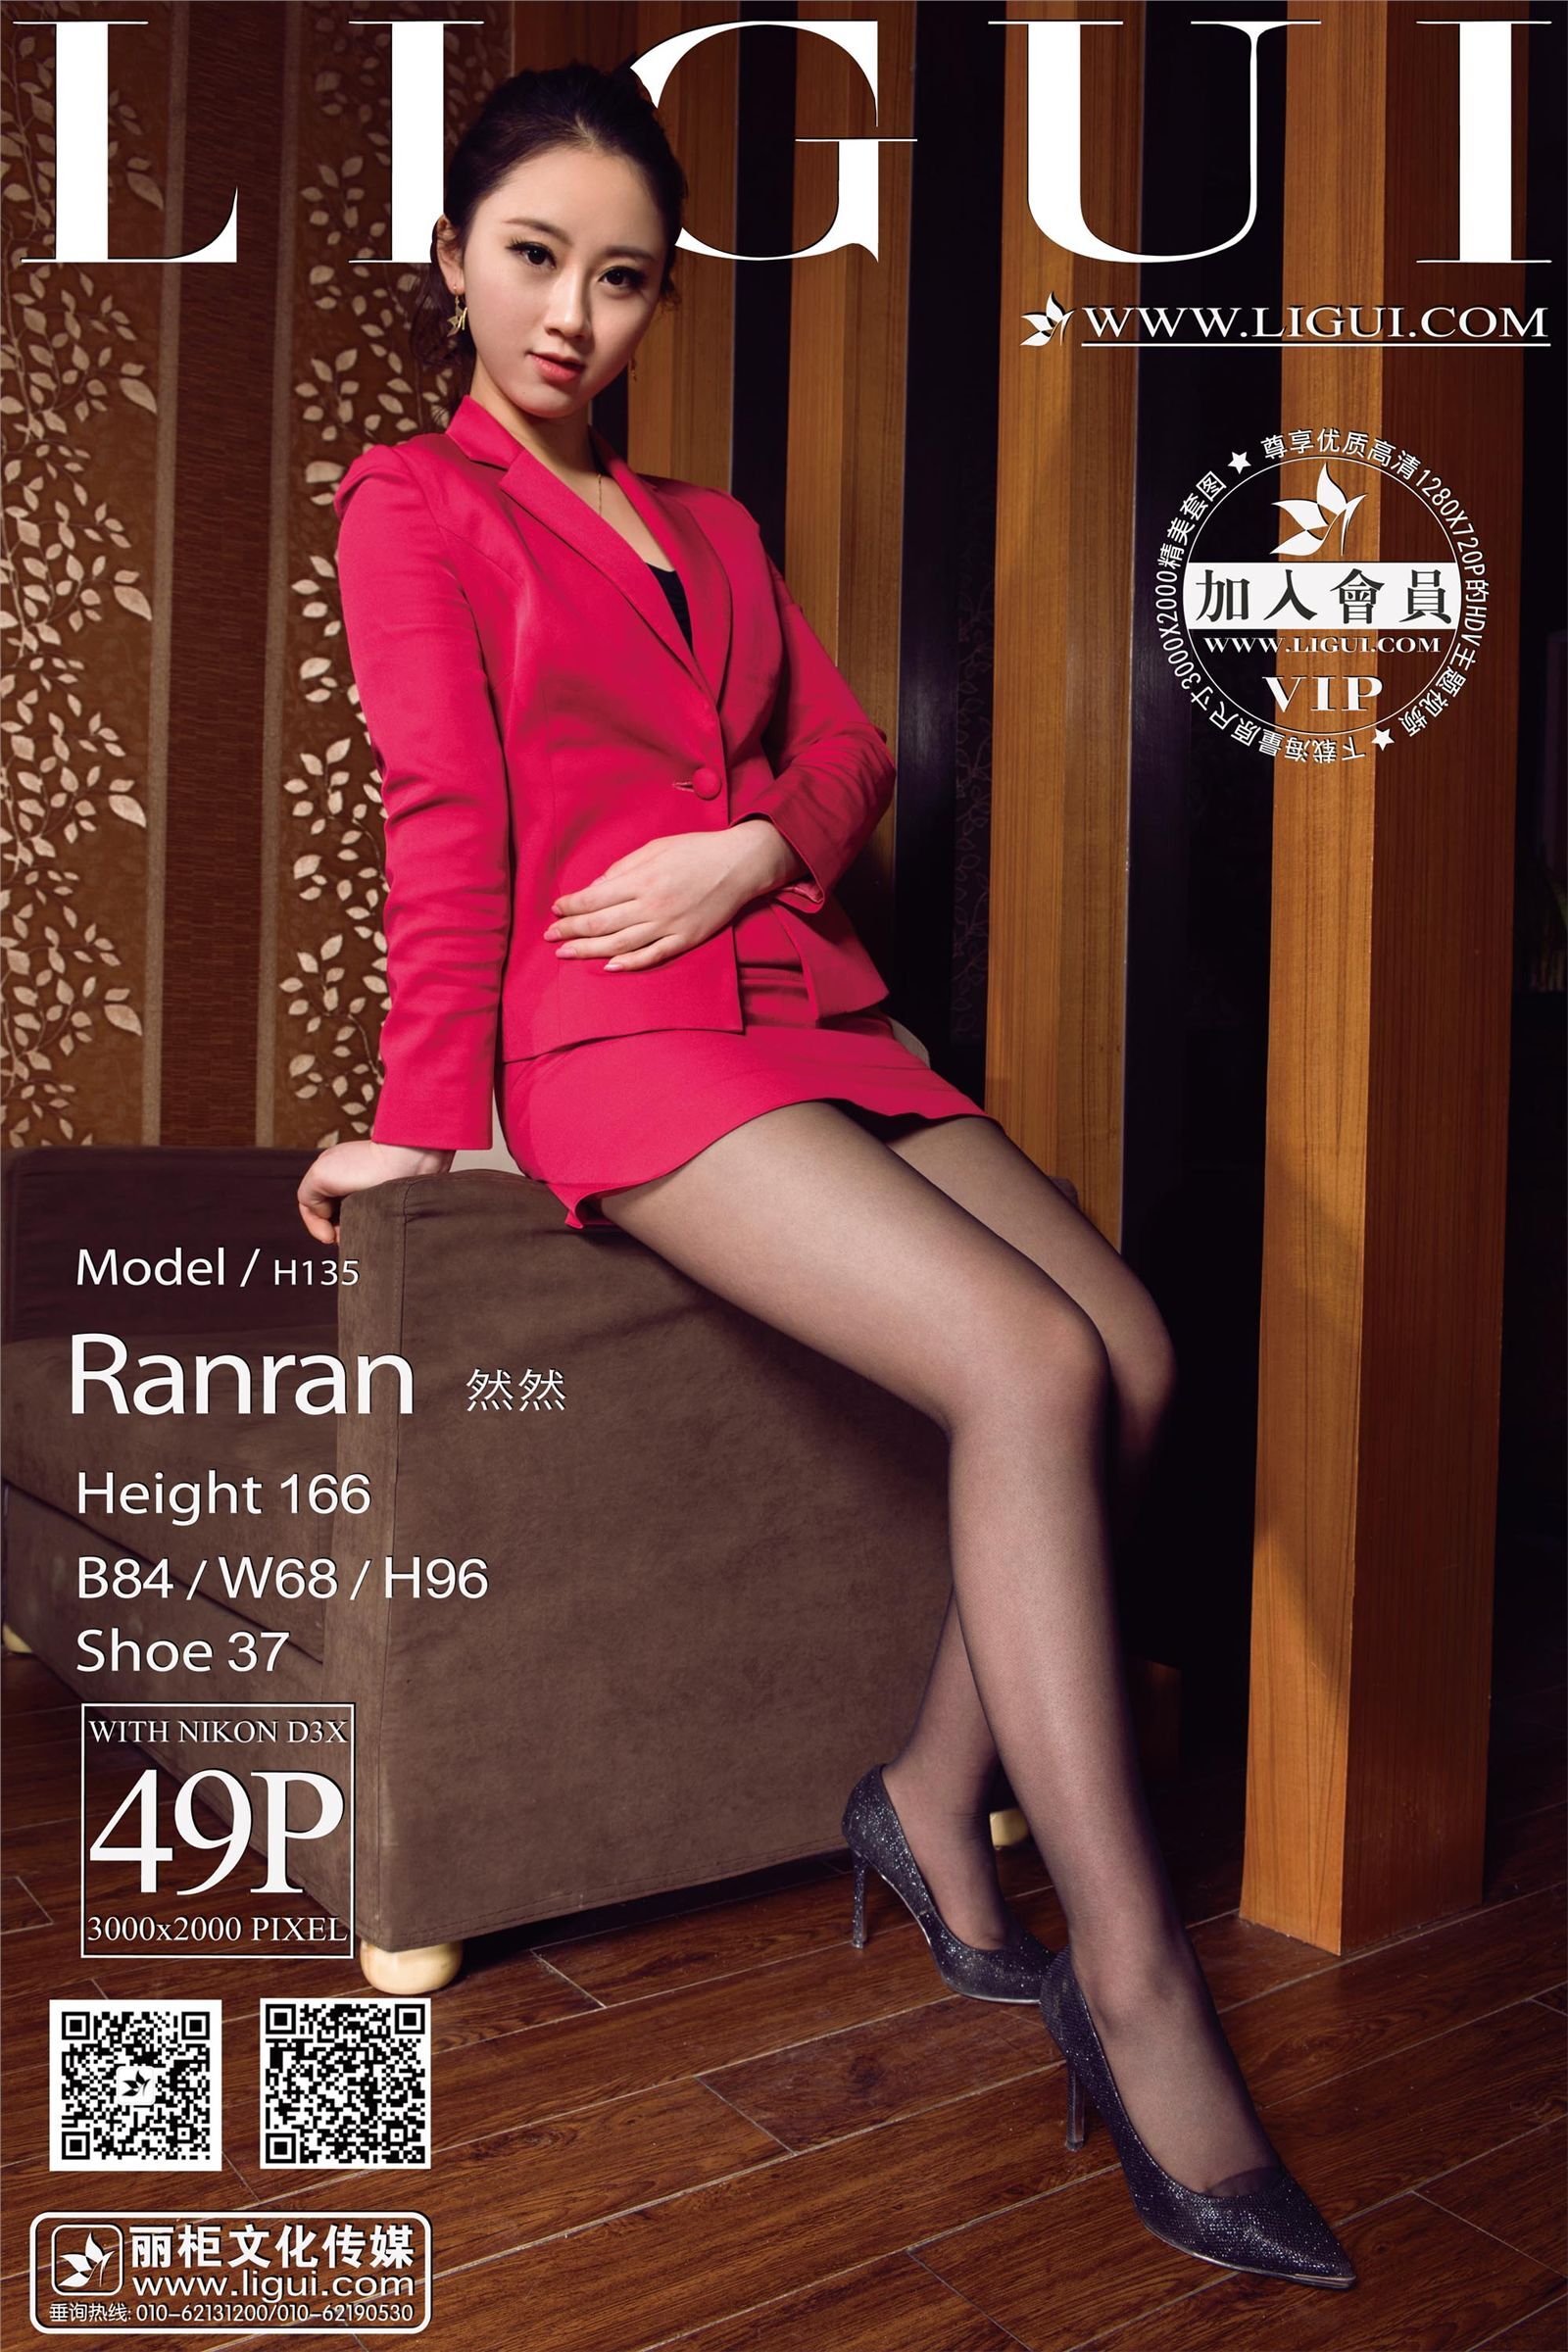 May 17, 2014 online beauty model Ran Ran